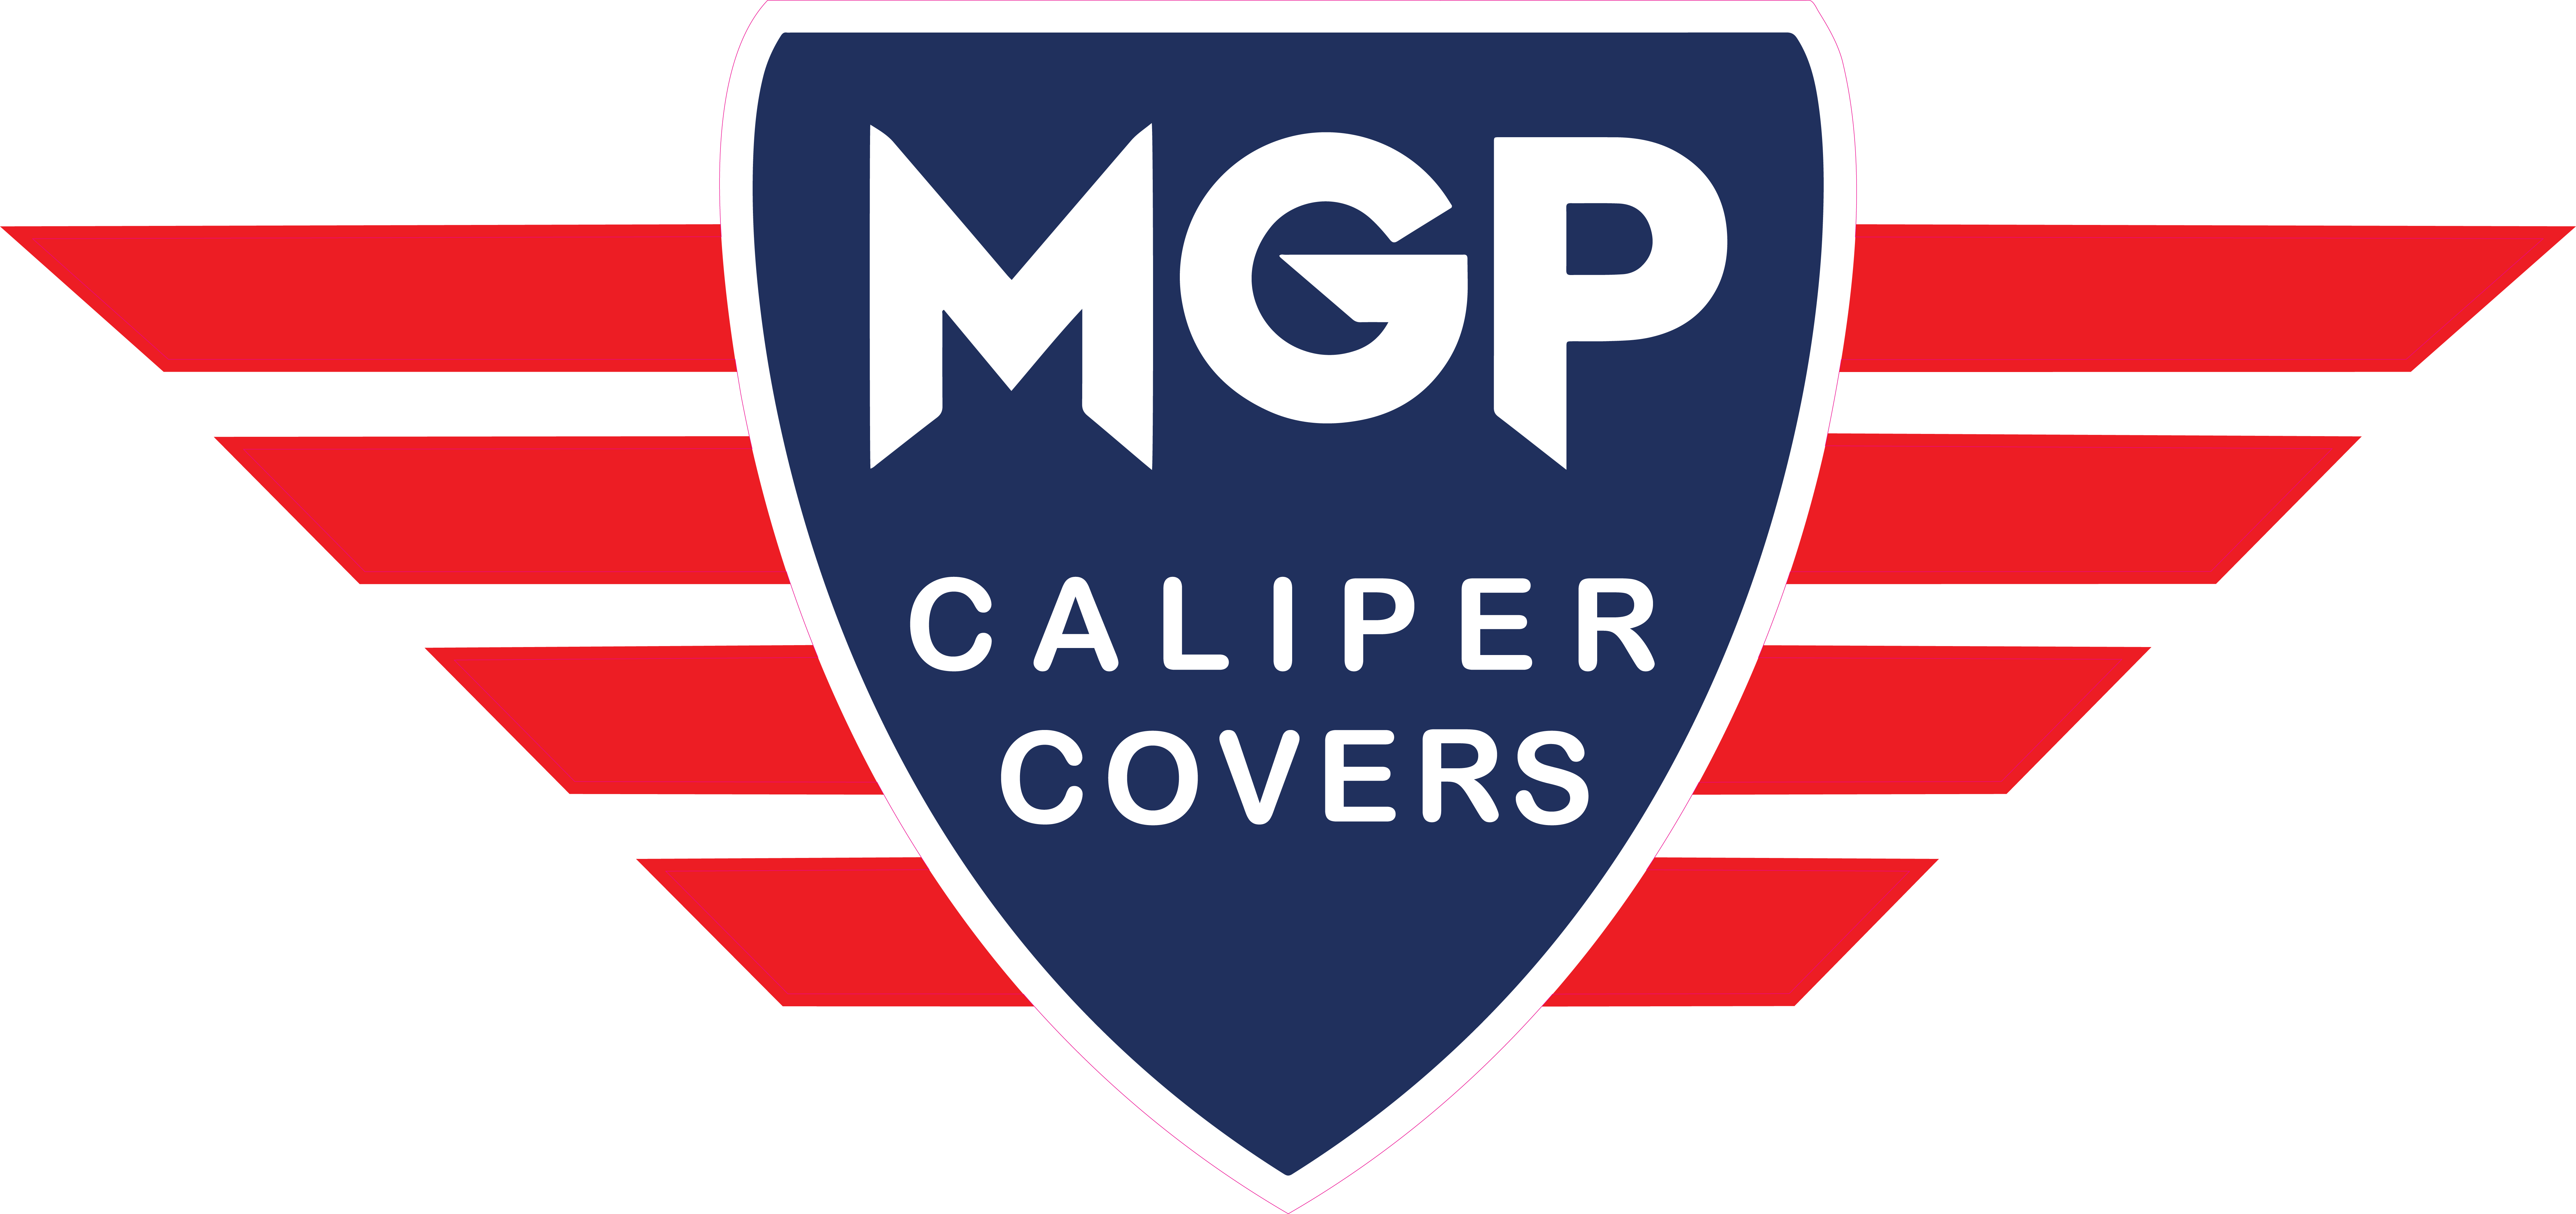 MGP Caliper Covers Brand Image